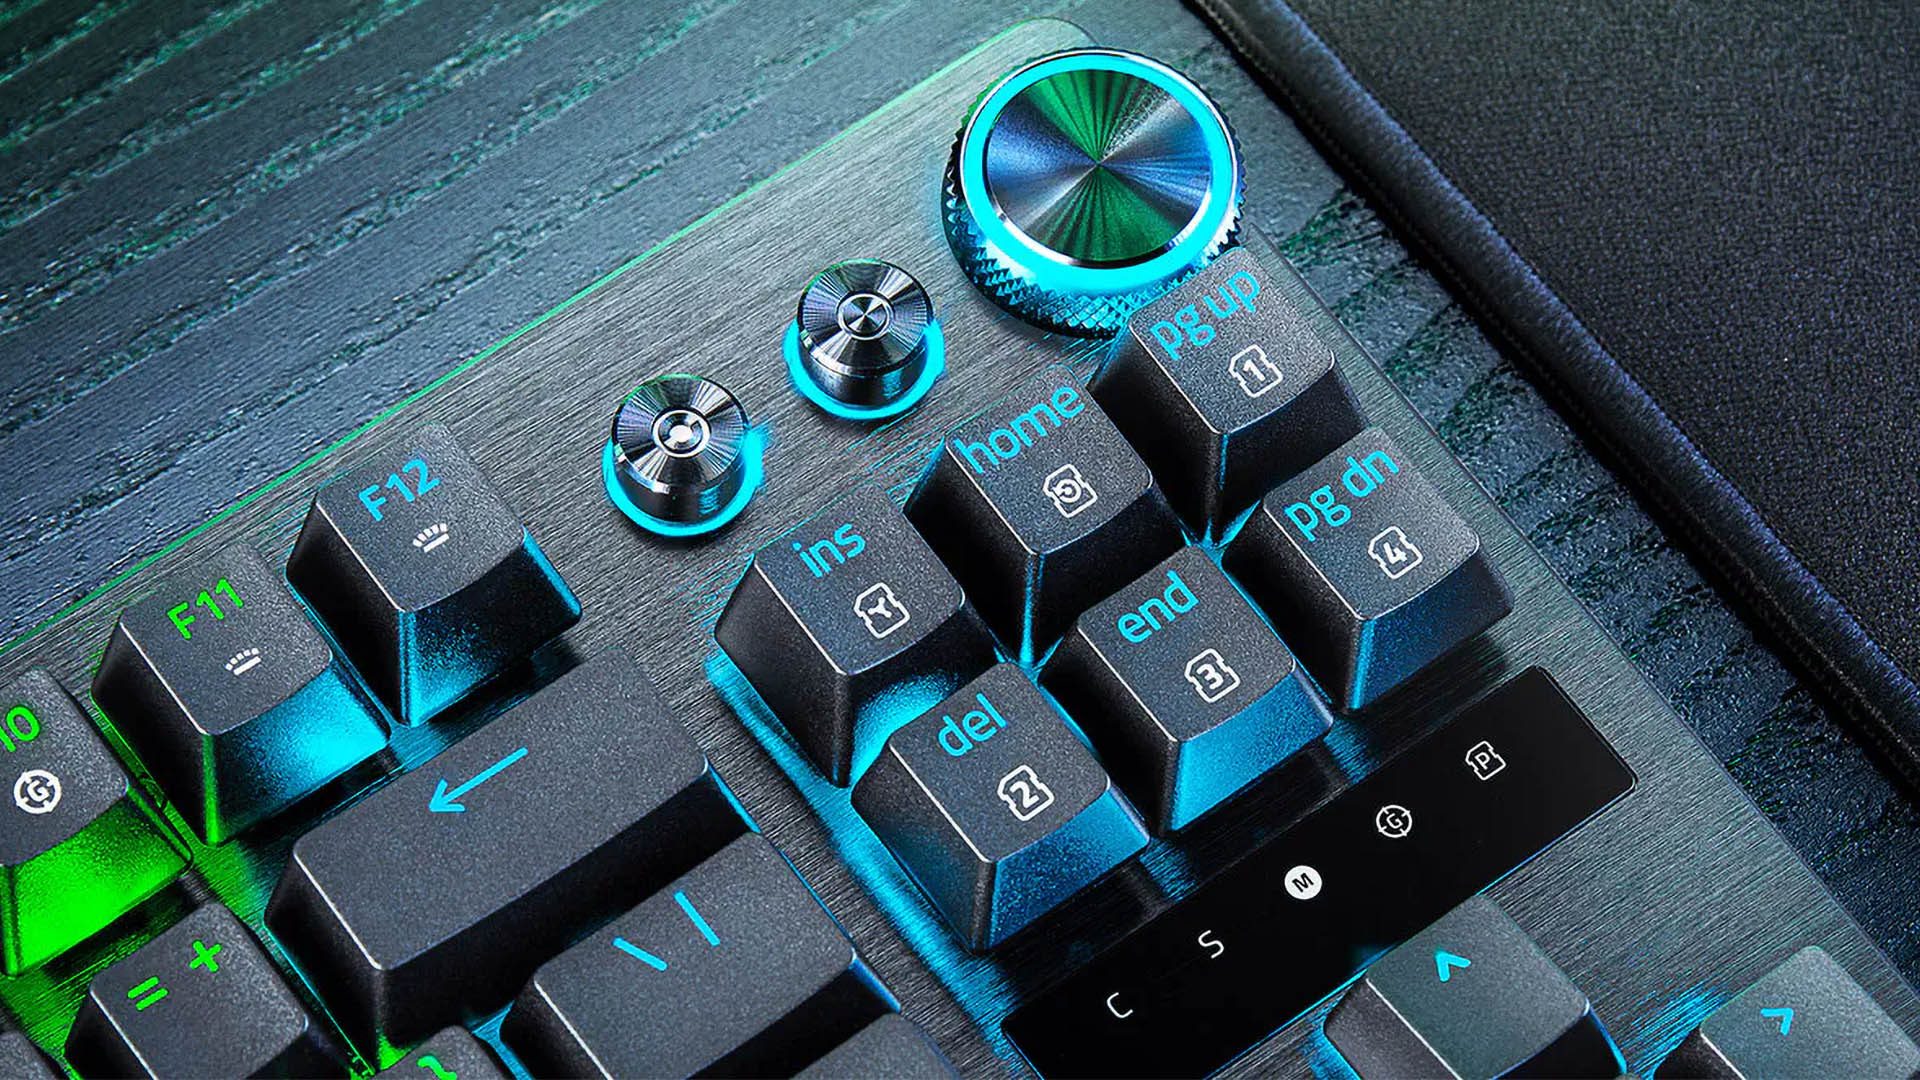  Razer Huntsman V2 Analog Gaming Keyboard: Adjustable Actuation  via Analog Optical Switches - Rapid Trigger Mode - Chroma RGB Lighting -  Magnetic Wrist Rest - Dedicated Media Keys & Dial - Black : Electronics